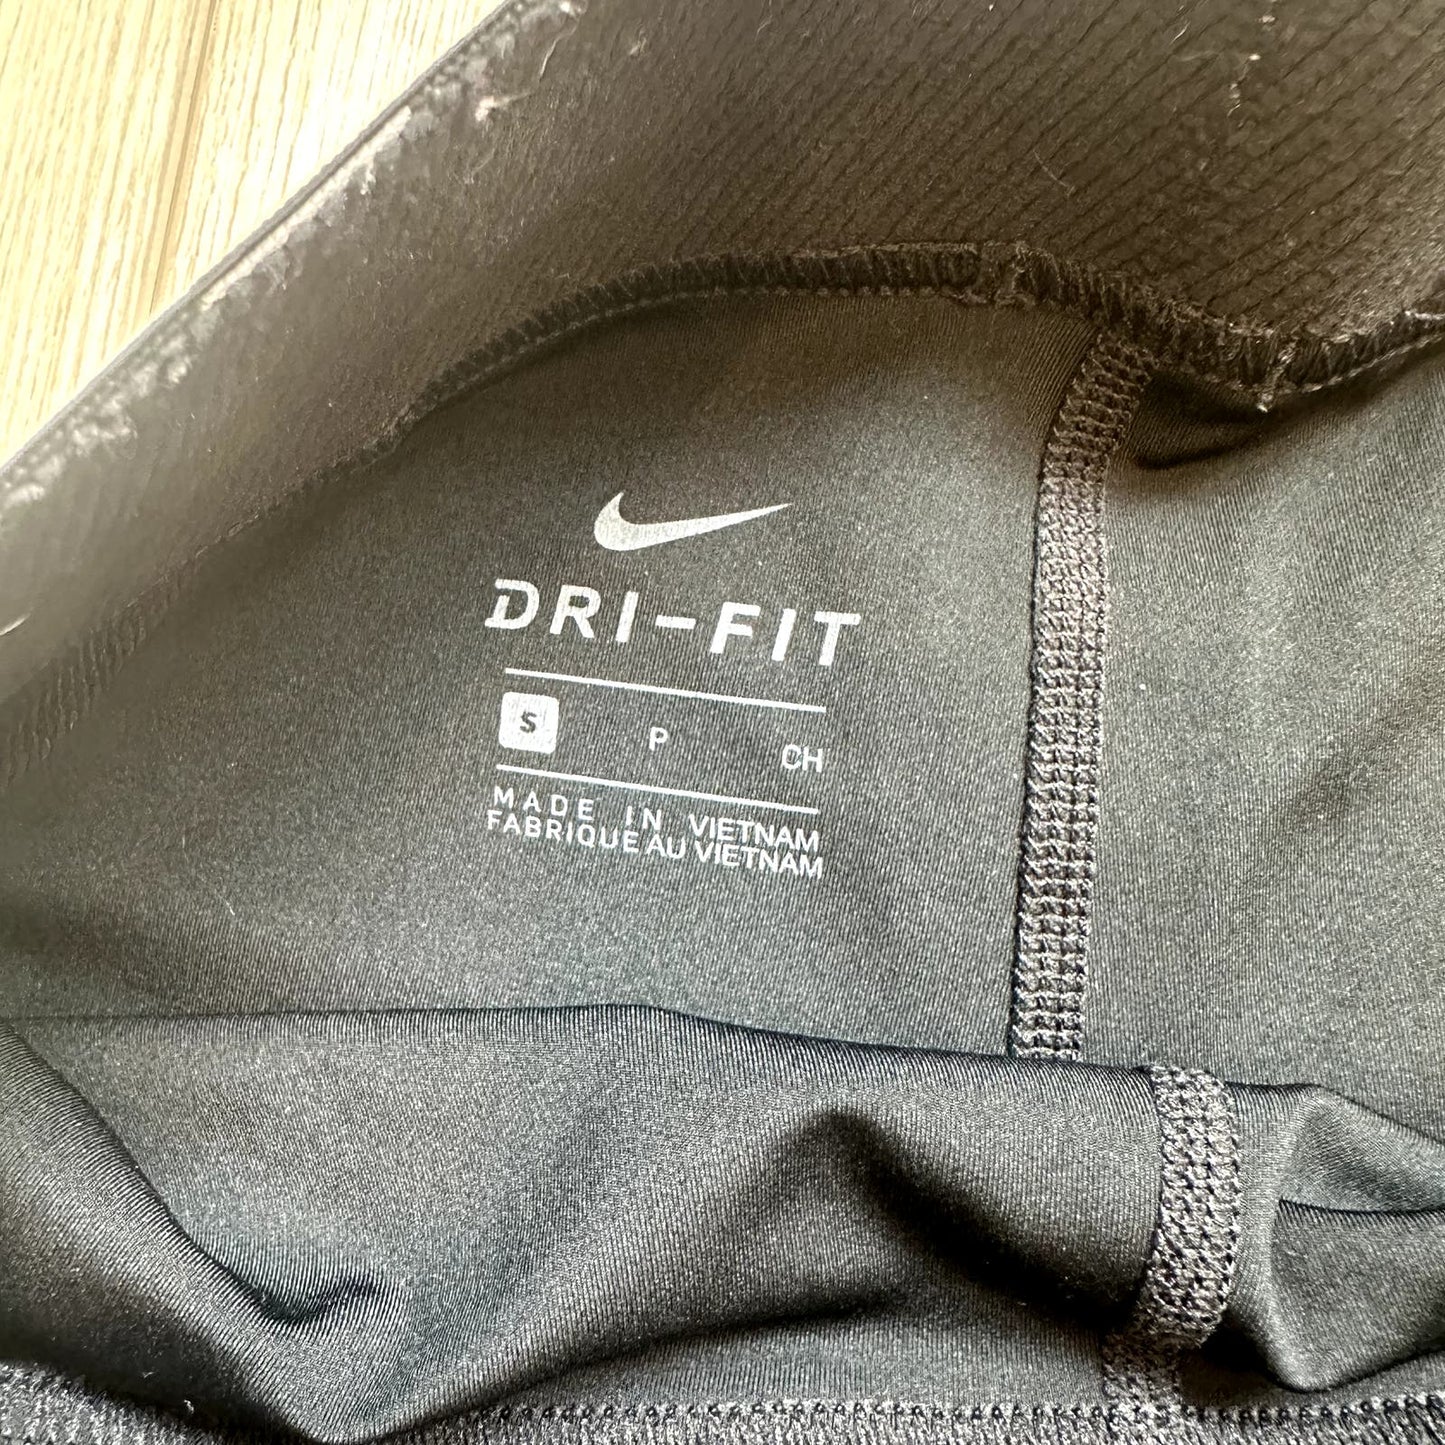 Nike Pro Dri-Fit black compression athletic gym shorts